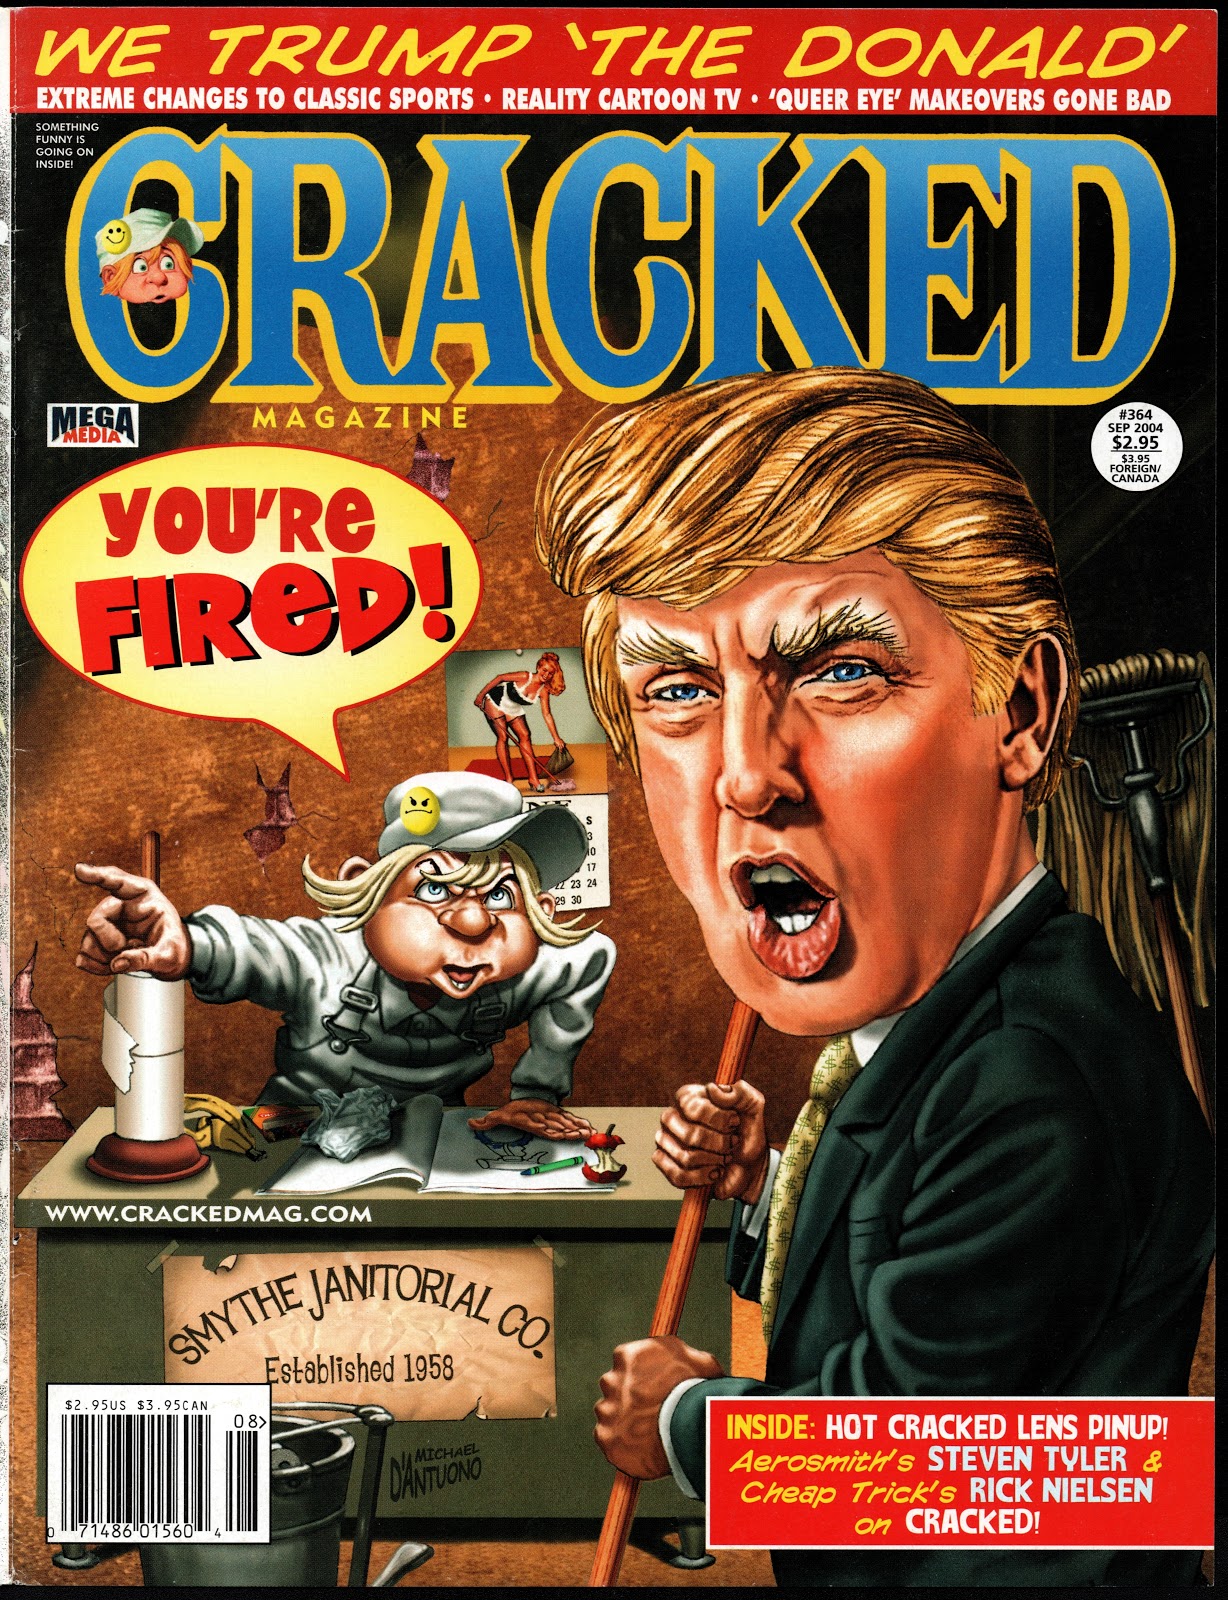 Журнал трещин. Cracked журнал. Cracked Magazine. Crack Magazine. September 2004 Cassette.